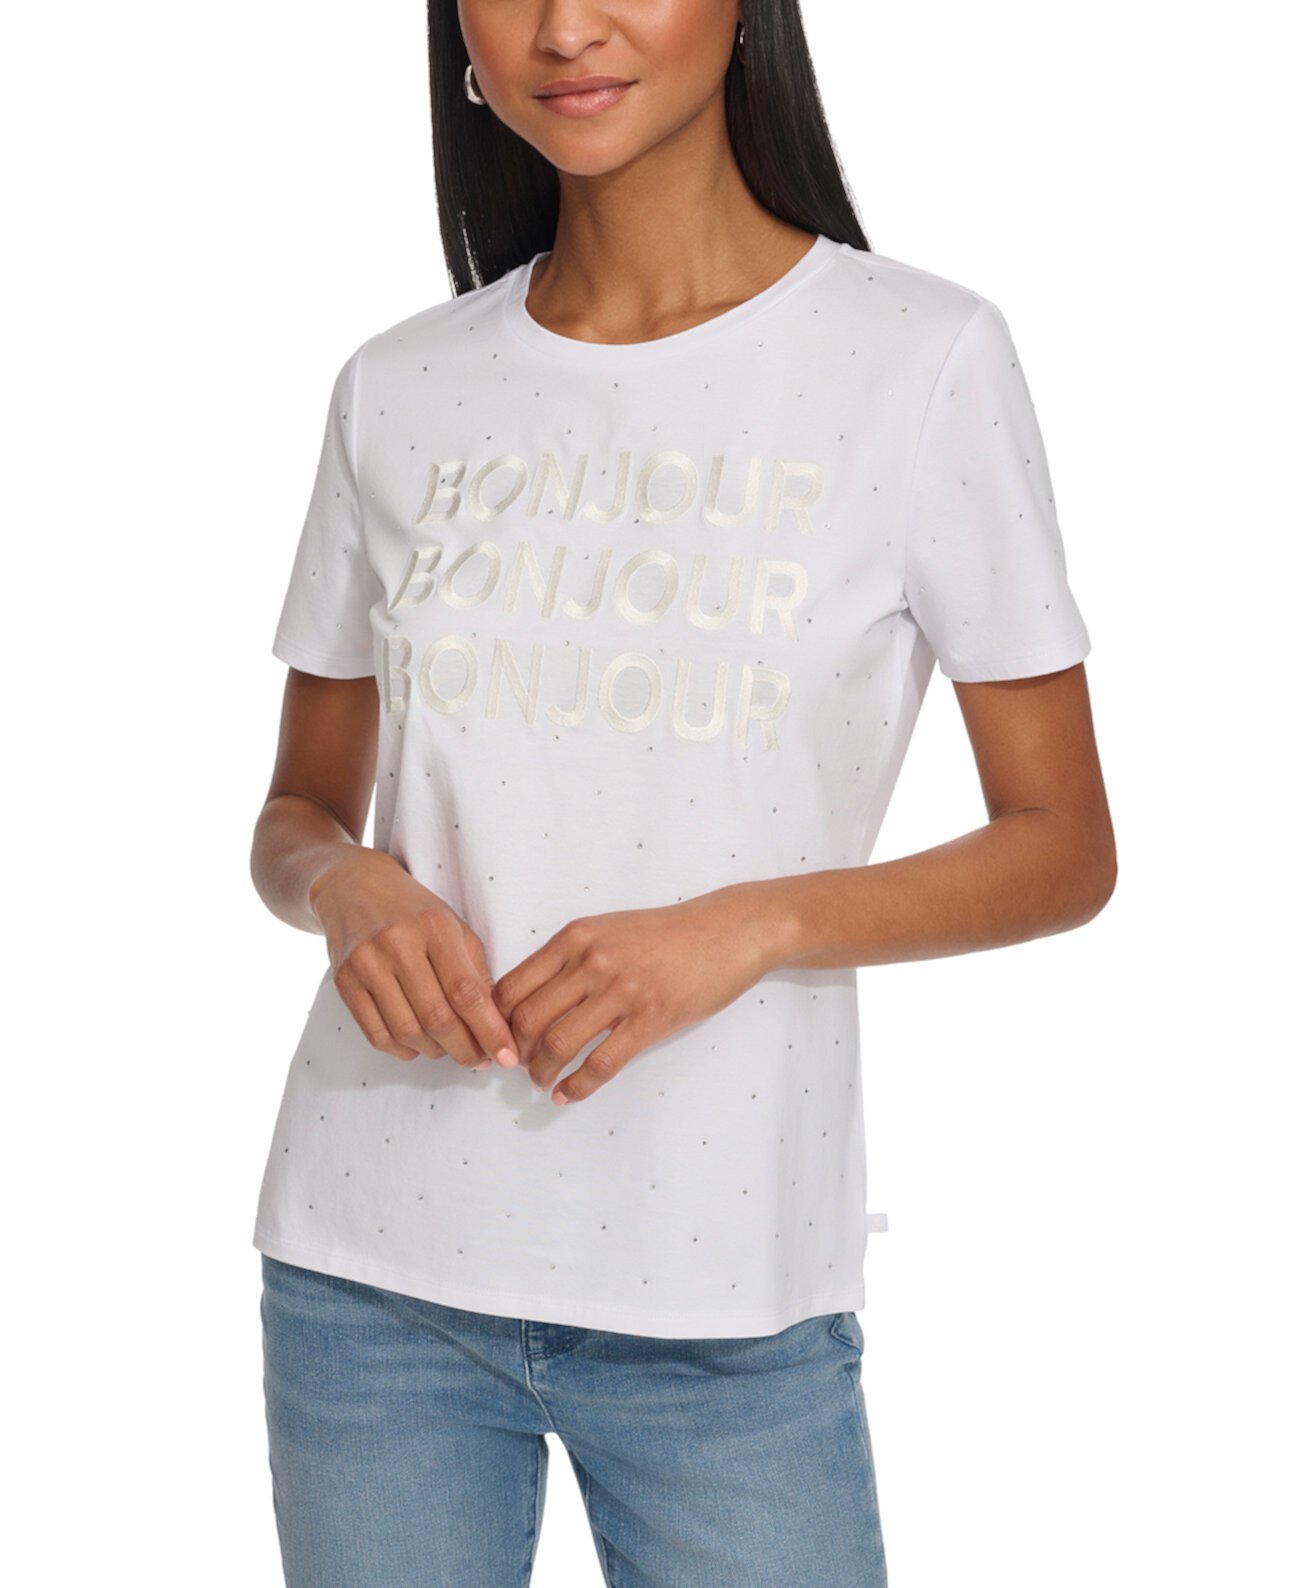 Women's Embellished Bonjour T-Shirt Karl Lagerfeld Paris